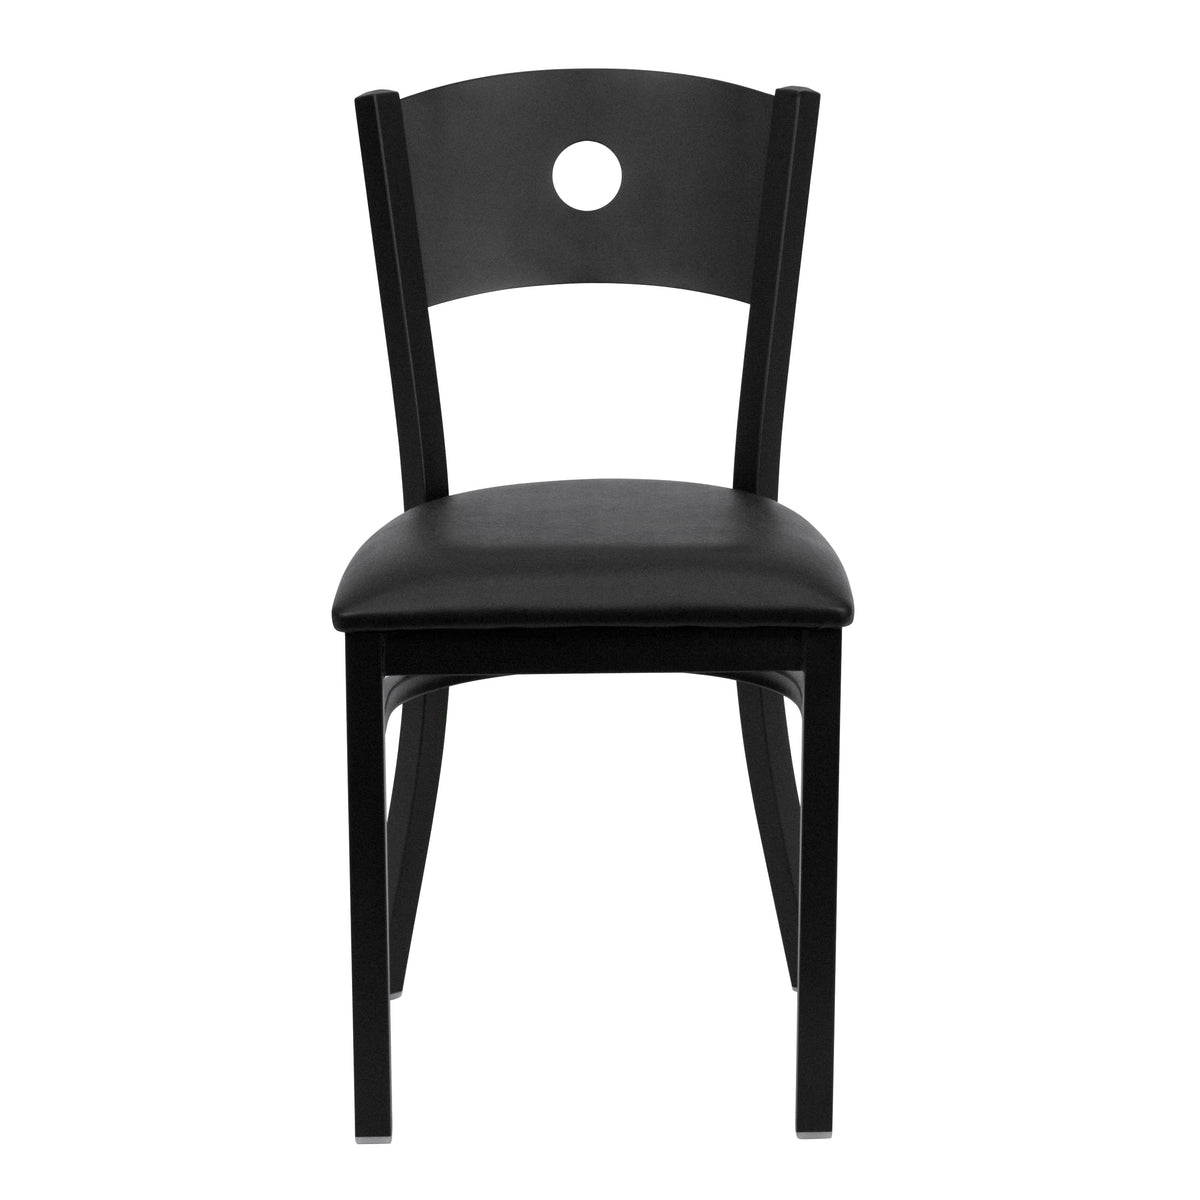 Black Vinyl Seat/Black Metal Frame |#| Black Circle Back Metal Restaurant Chair - Black Vinyl Seat